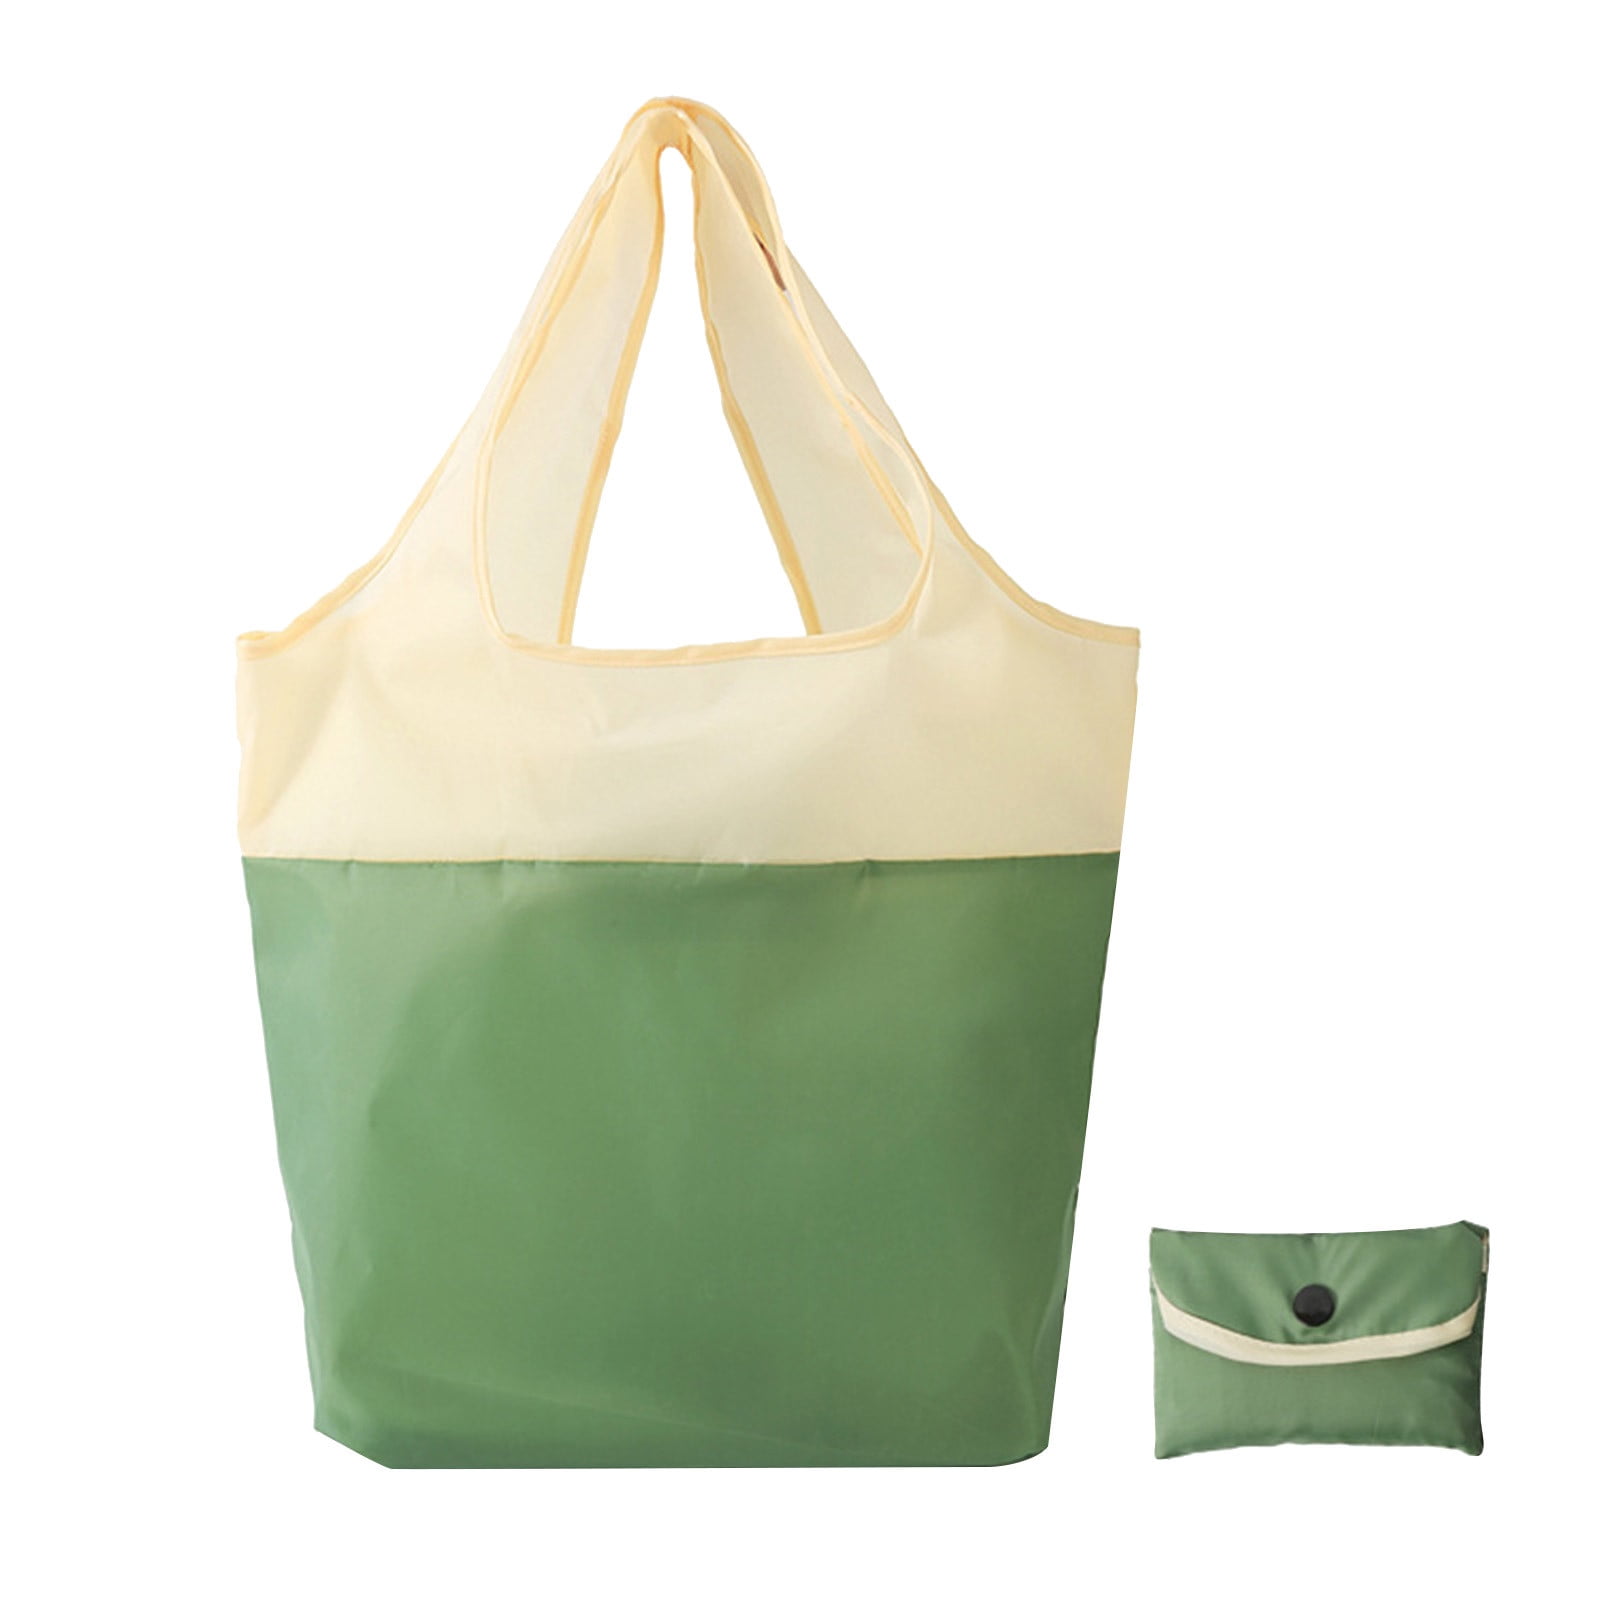 AnuirheiH Reusable Grocery Bags Foldable Washable Shopping Bags Folding Reusable Bags Tote Bag Storage Bag Lightweight Polyester Fabric b871be42 8539 41ca 946a 4aec63189e81.1a97a94d67705c119216ecfcb71076c0